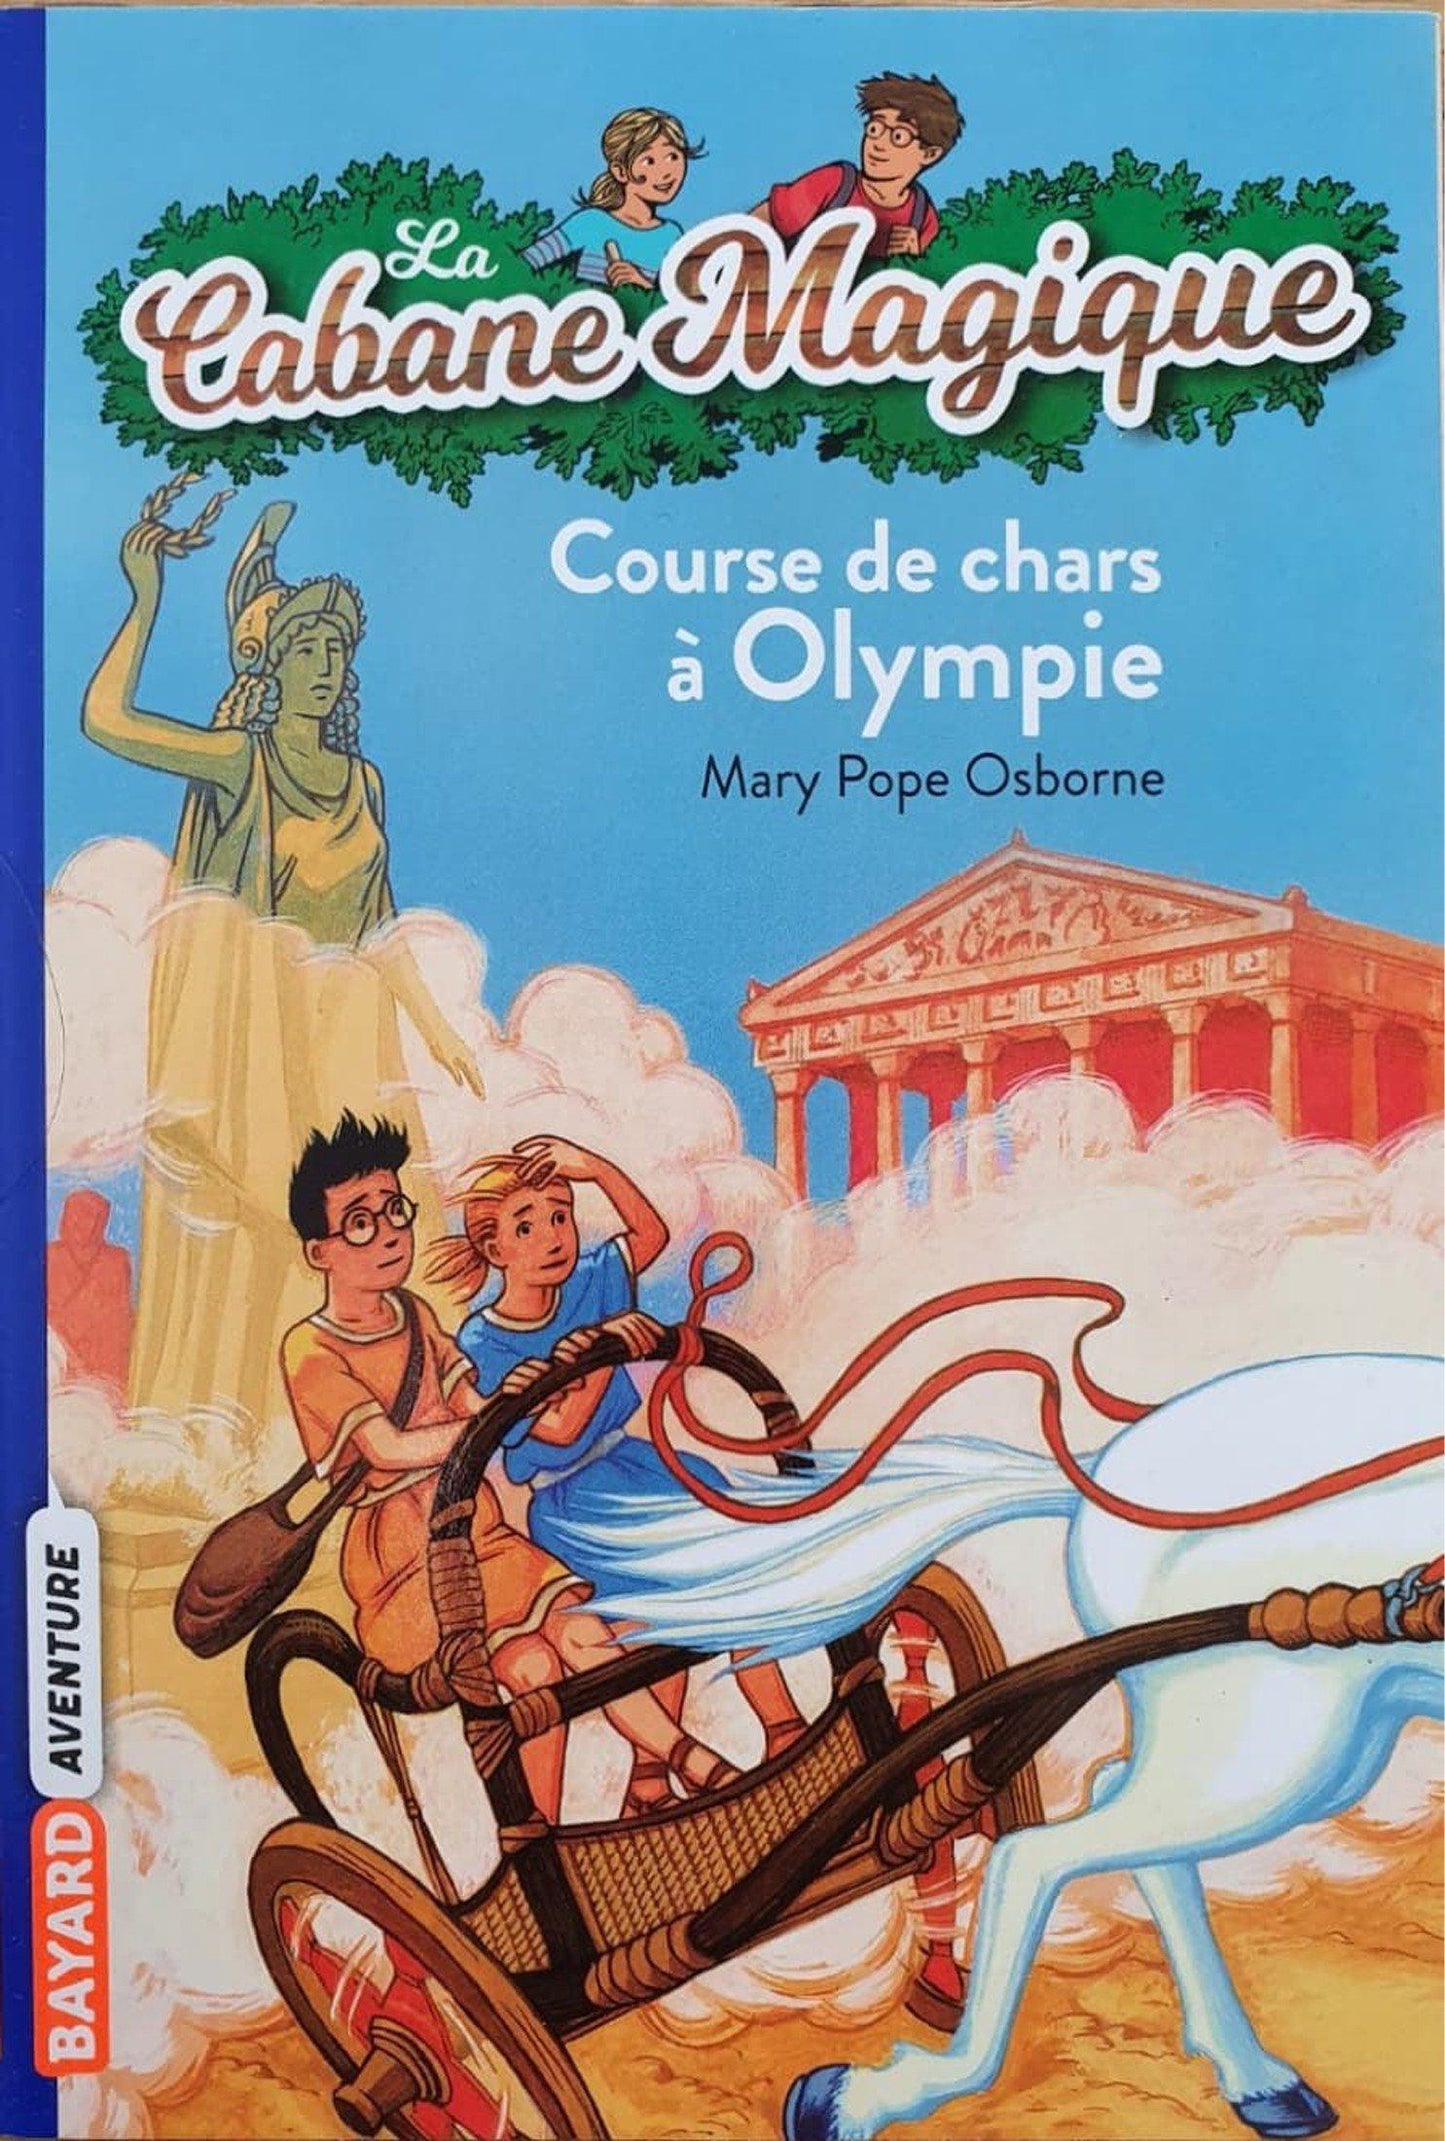 Course de chars à Olympie Like New, 6+ Yrs Caroline Faivet  (6652156313785)